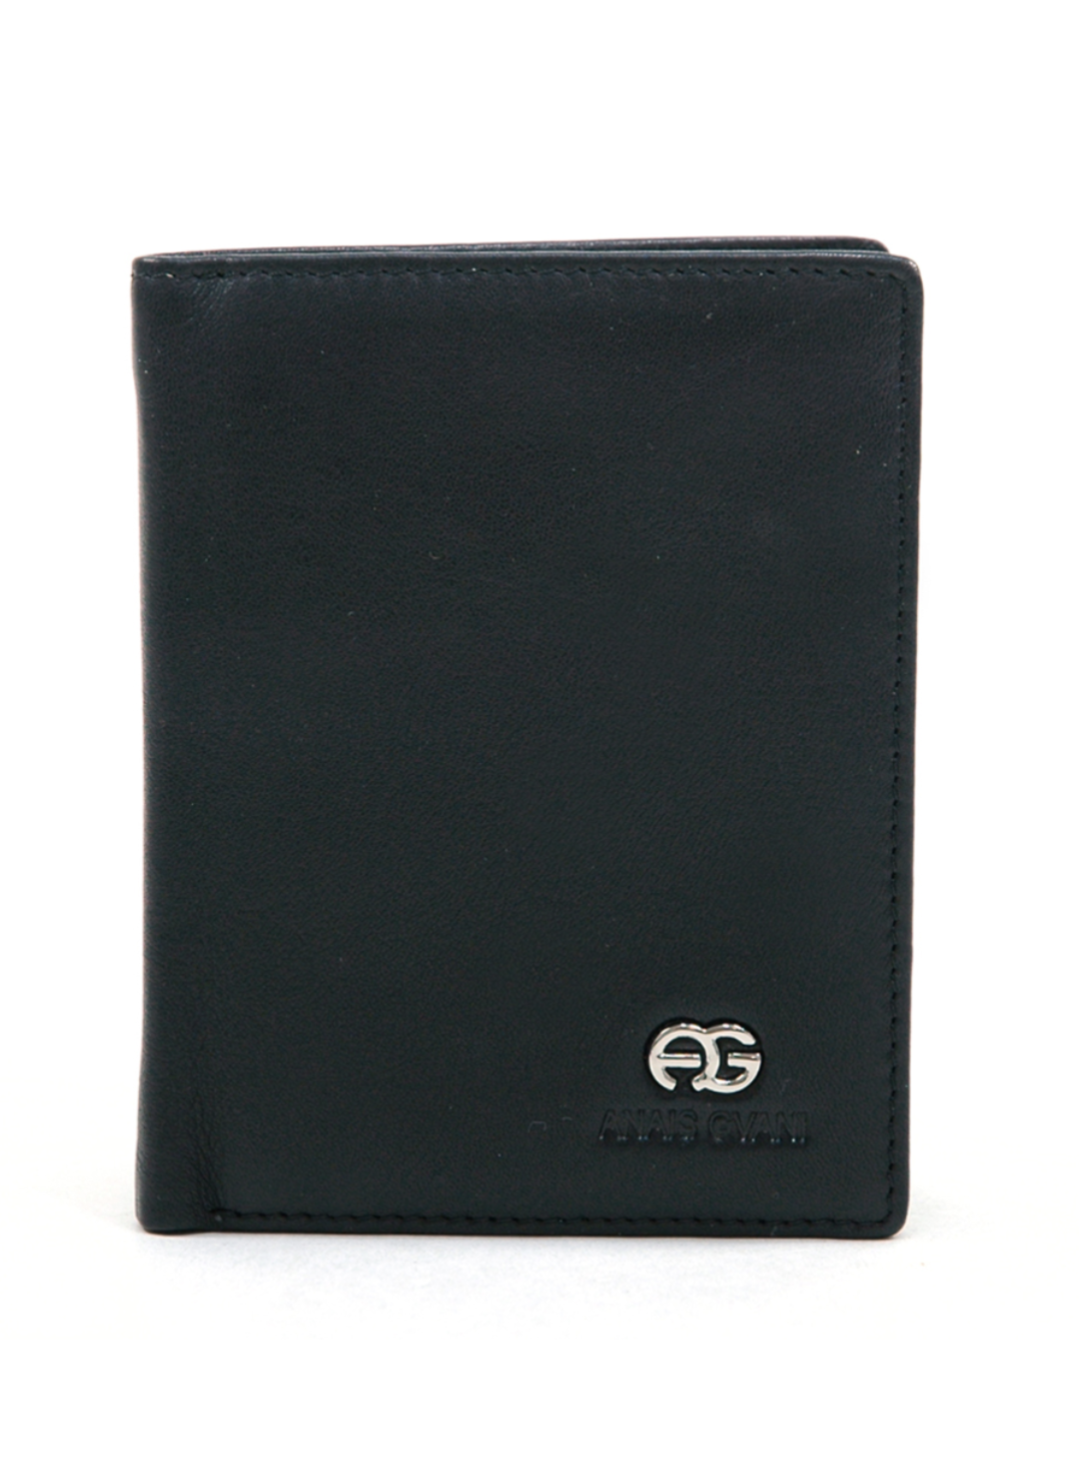 Men's Genuine Leather Wallet